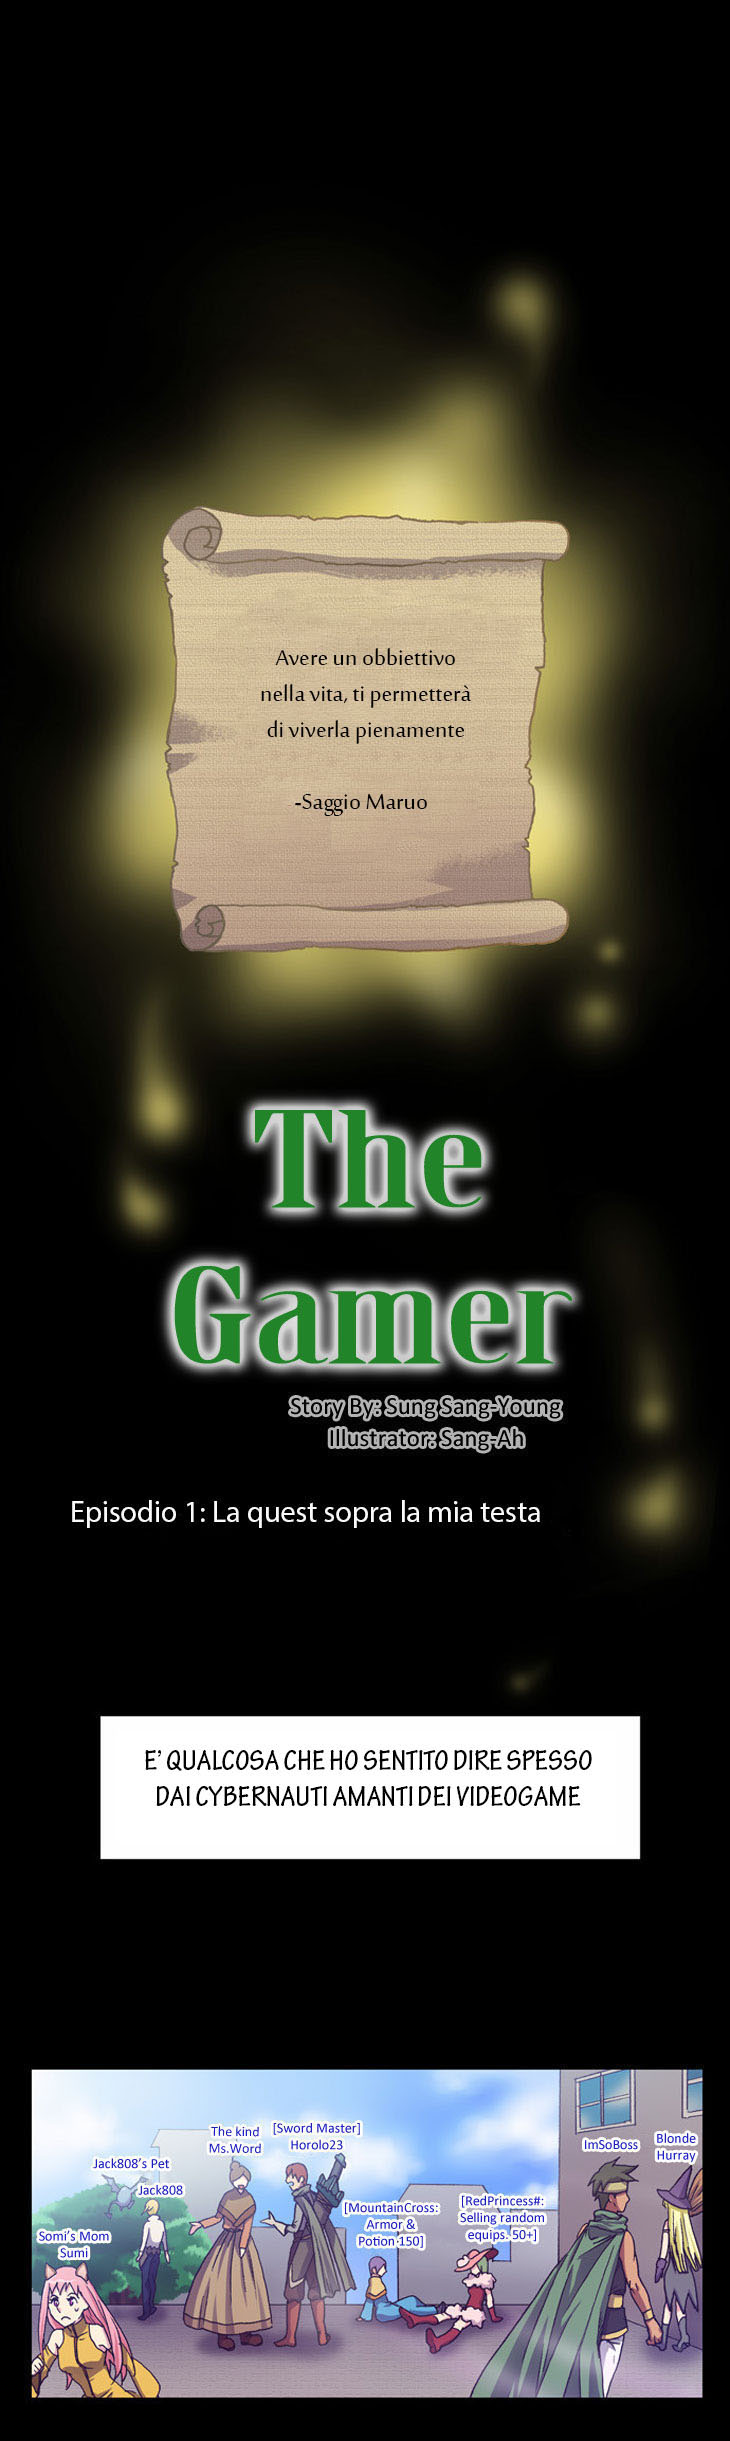 The Gamer - ch 001 Zeurel